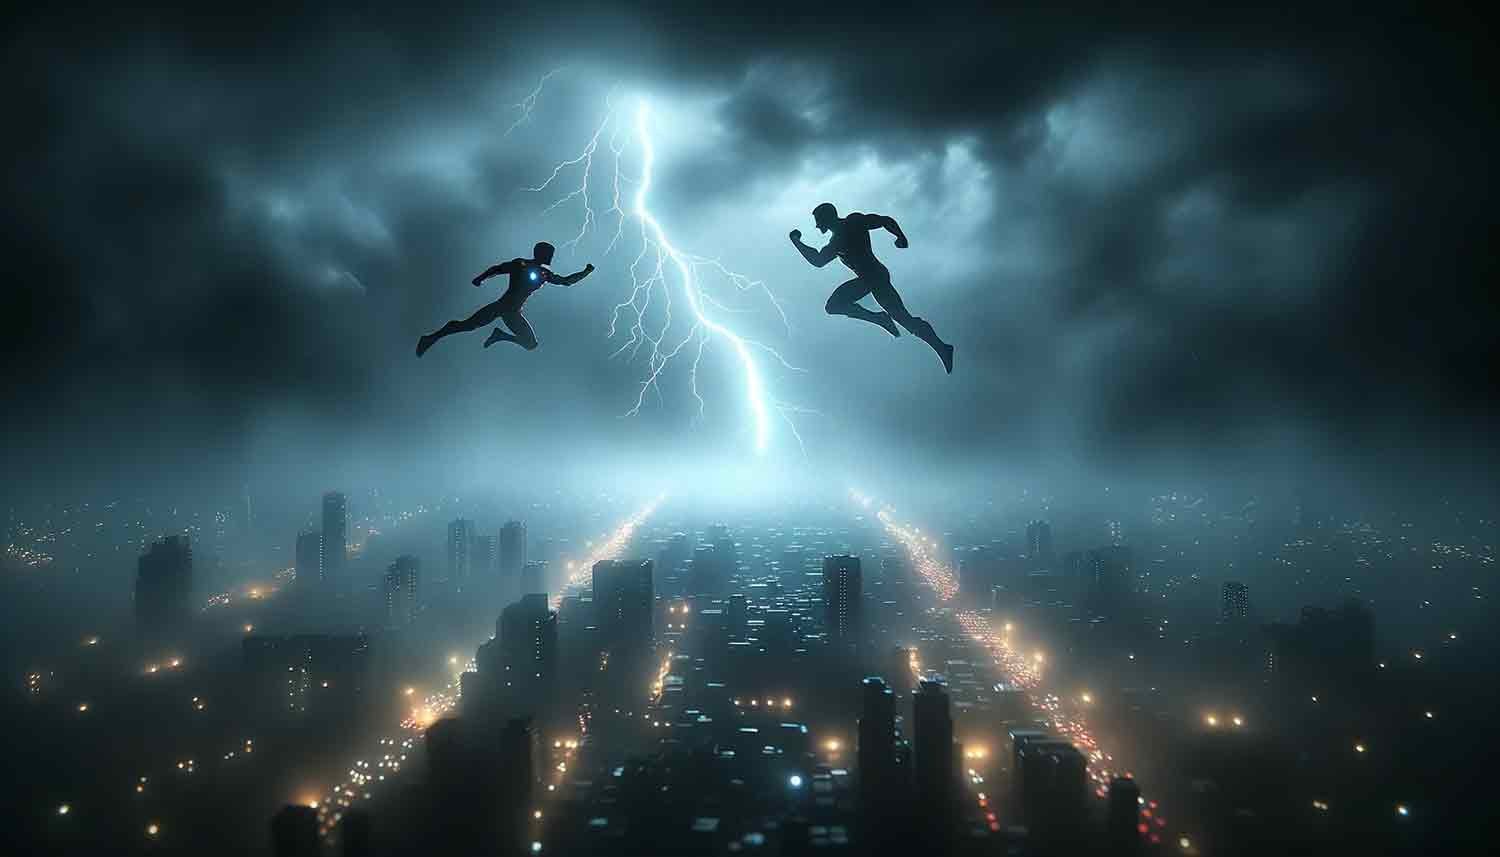 Superhero story above city